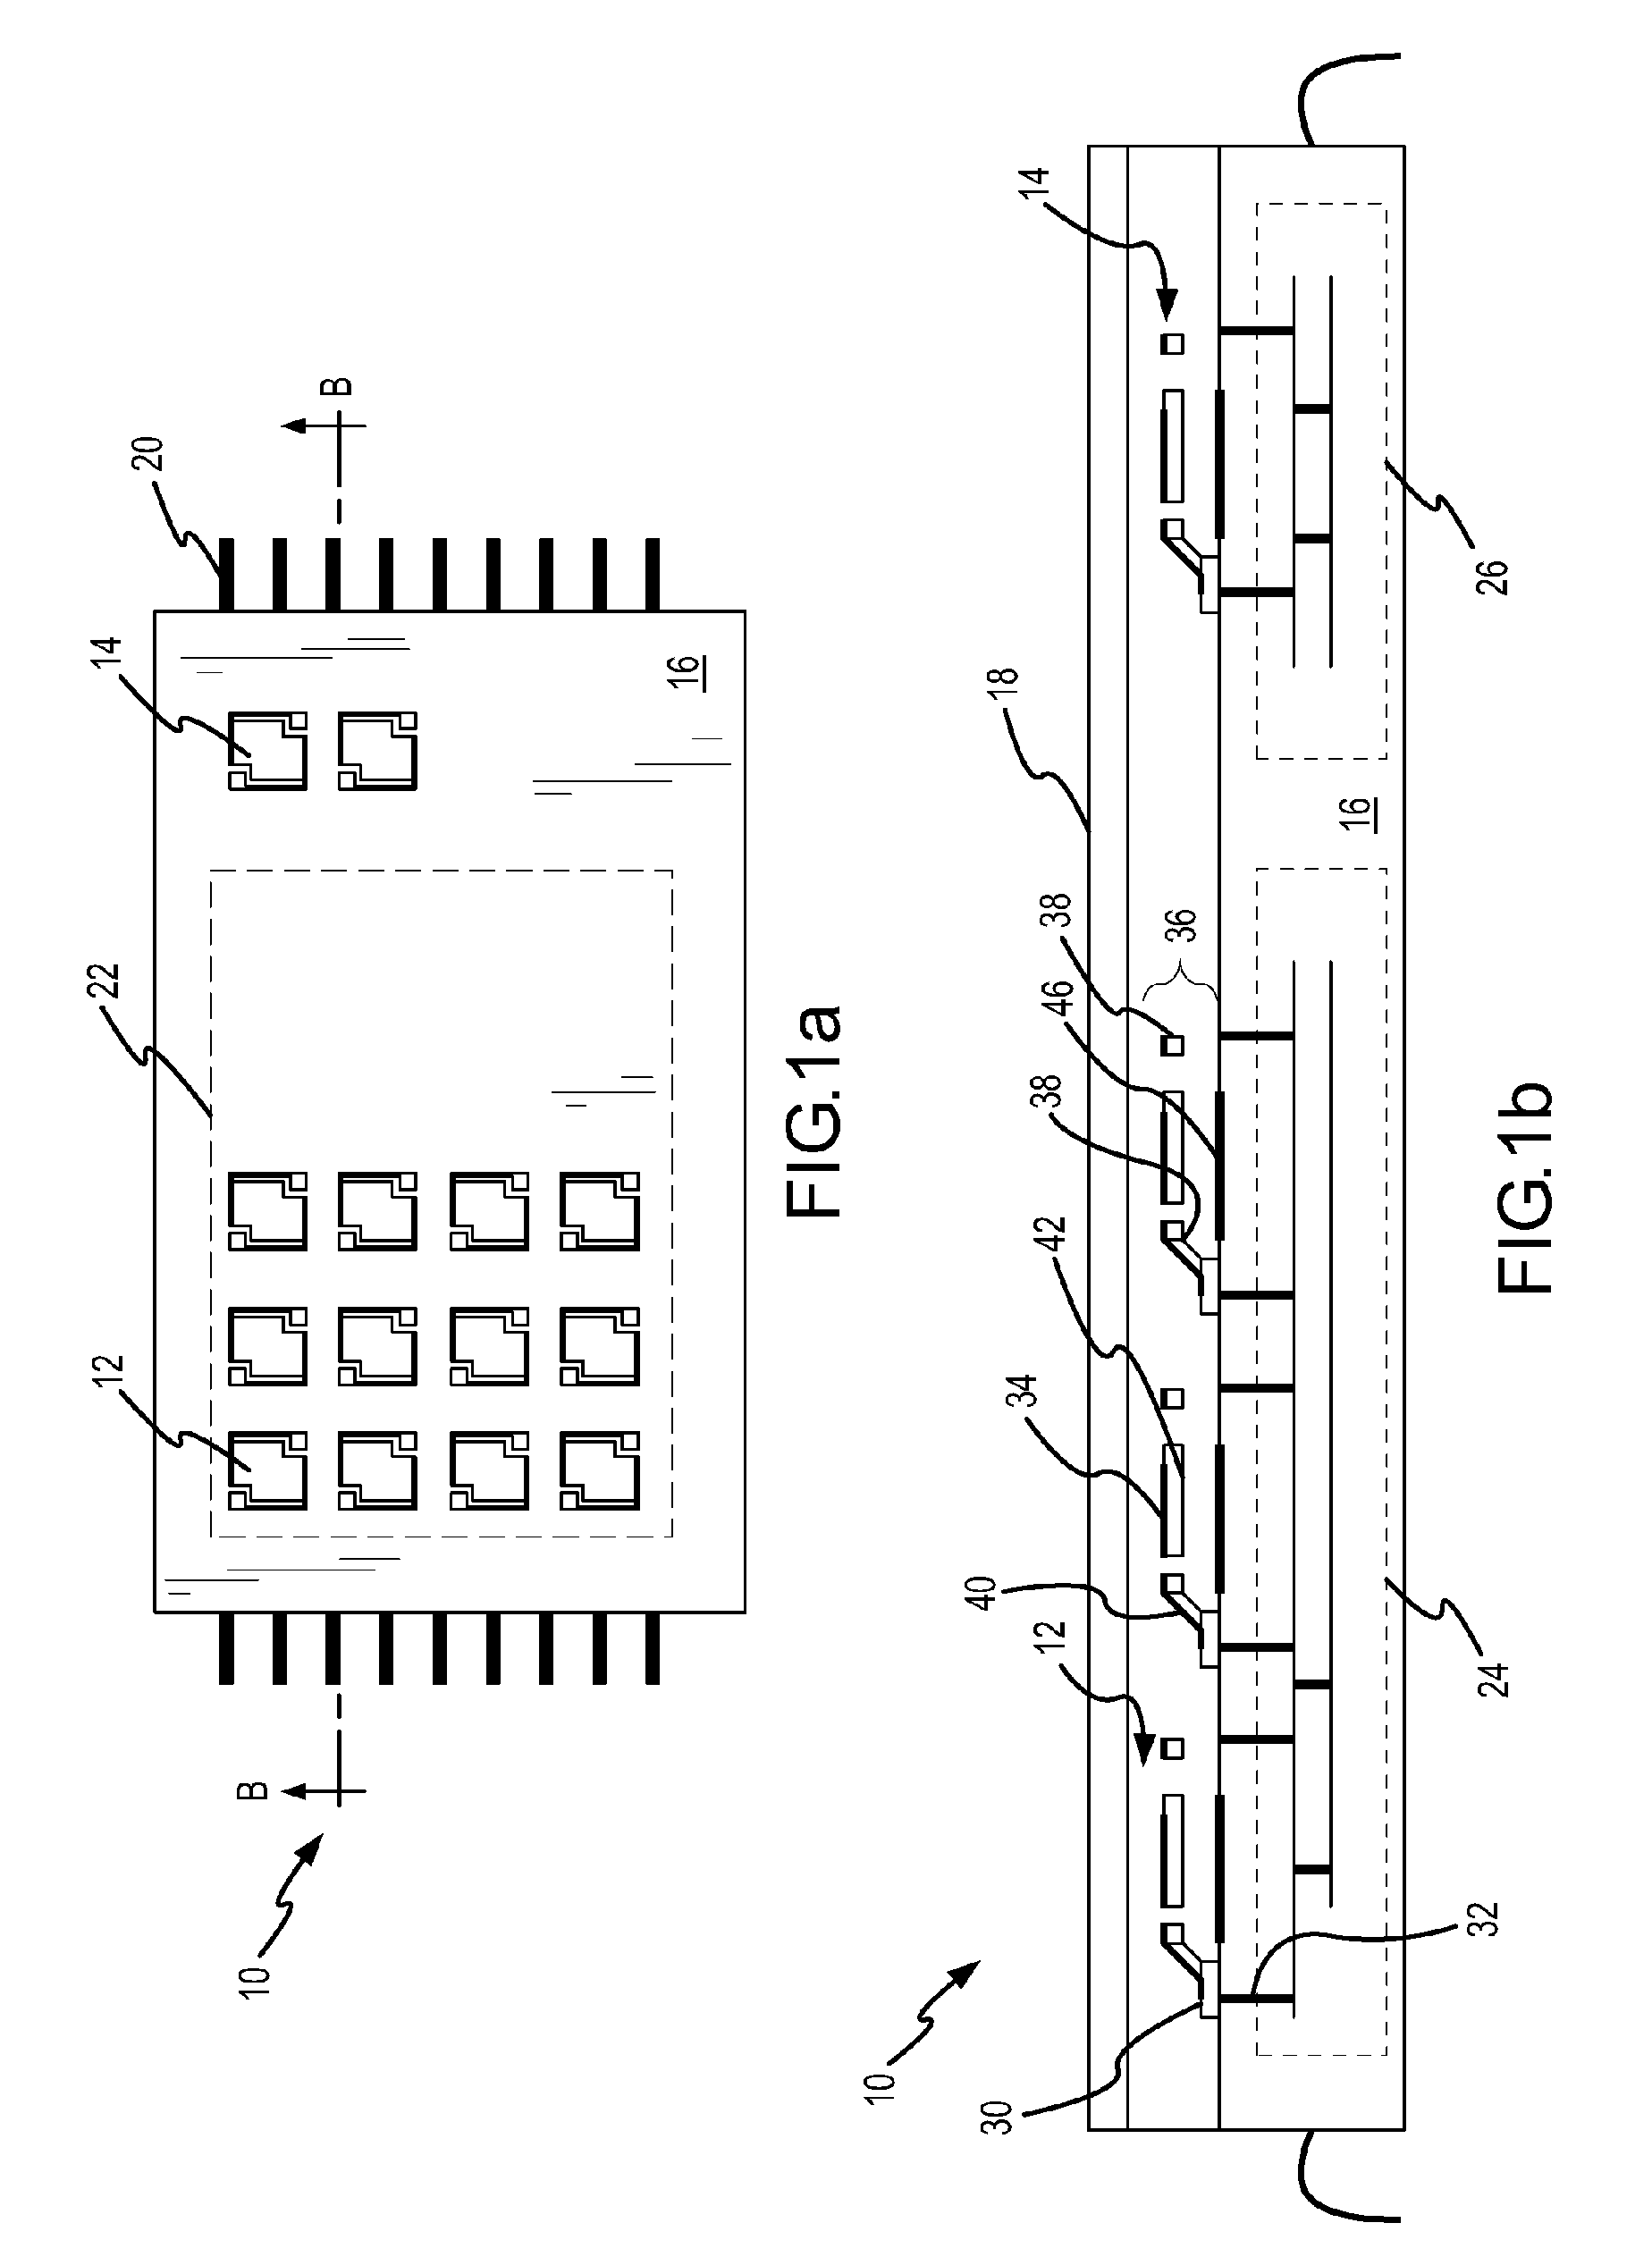 Microbolometer IR Focal Plane Array (FPA) with In-Situ Micro Vacuum Sensor and Method of Fabrication